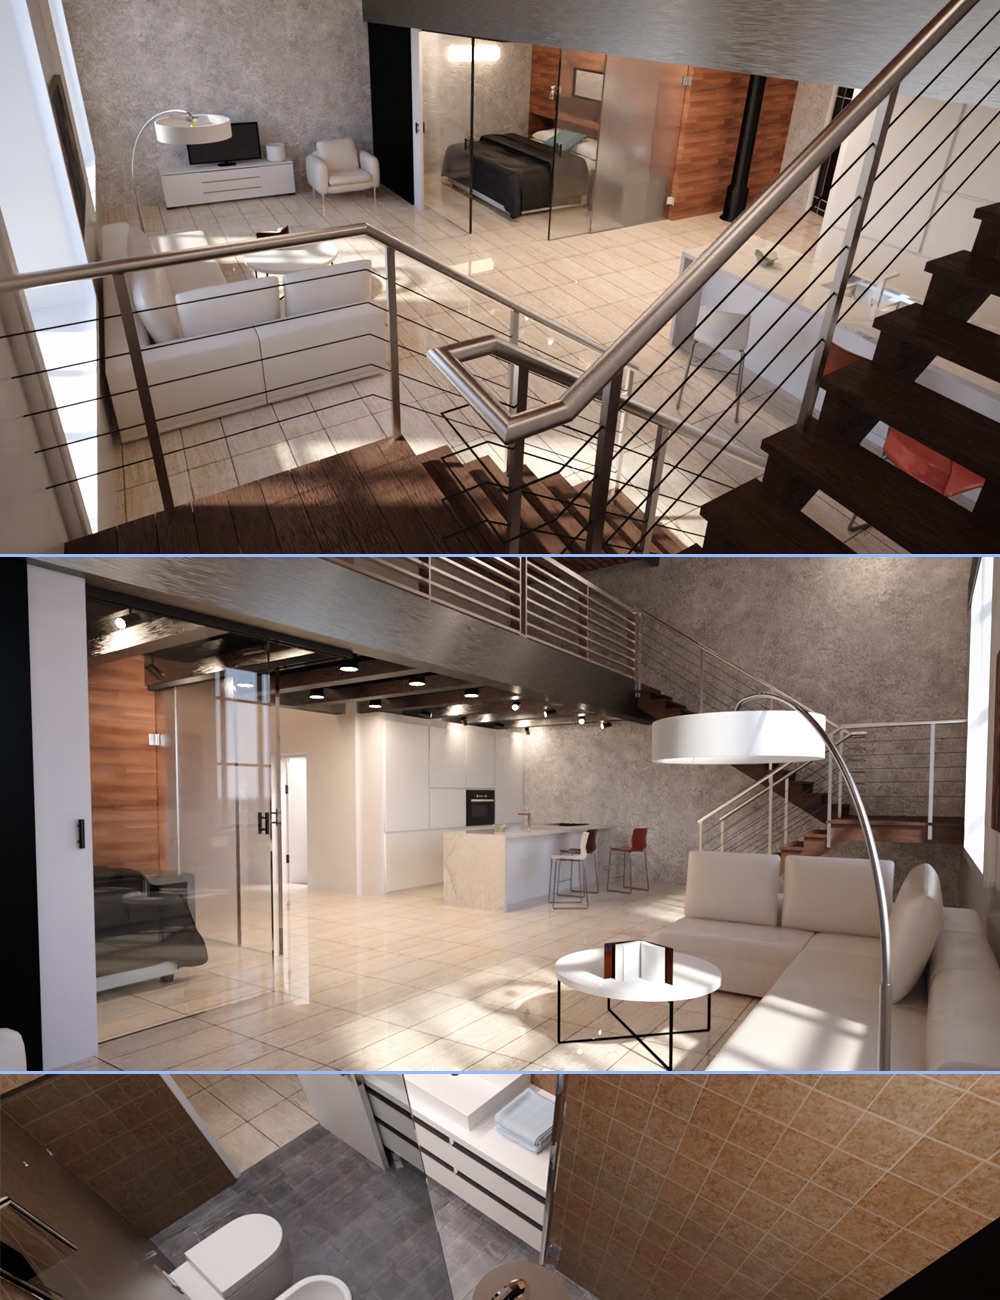 Studio Loft Apartment by: PerspectX, 3D Models by Daz 3D